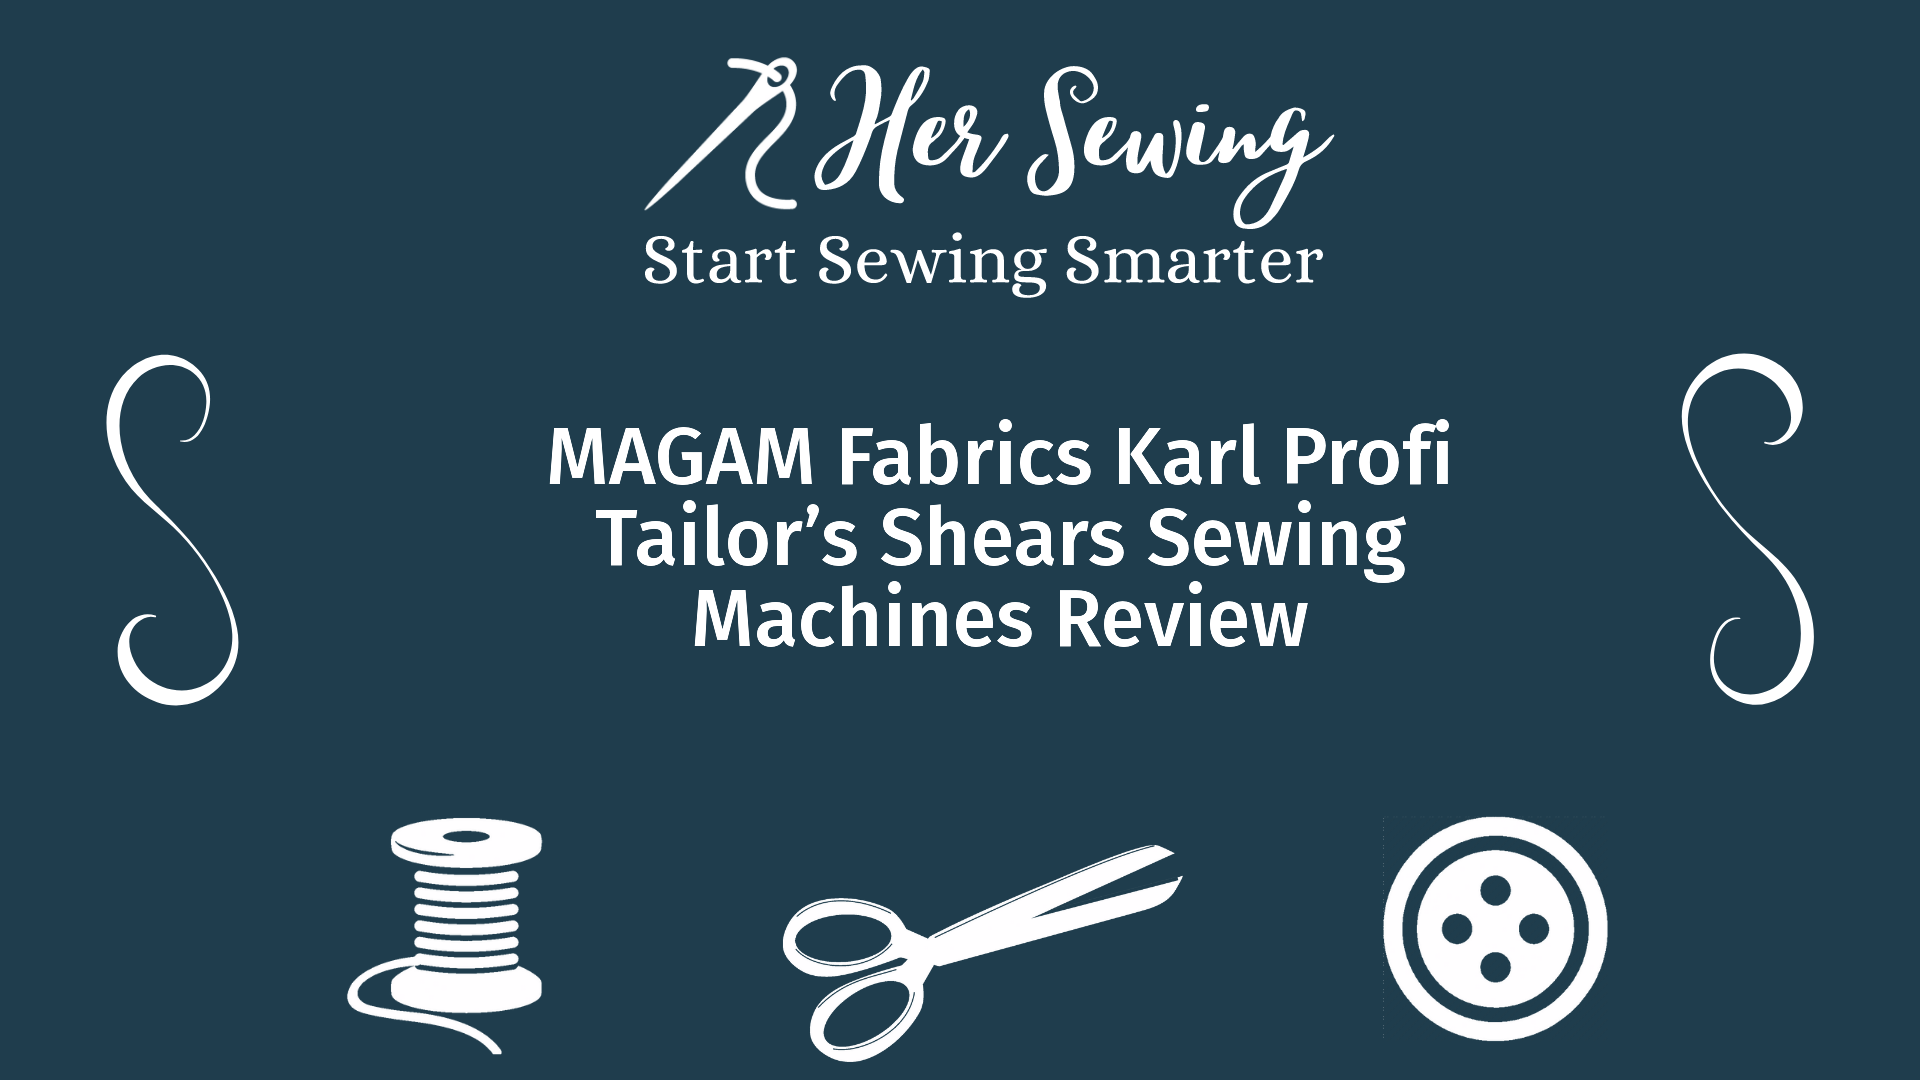 MAGAM Fabrics Karl Profi Tailor’s Shears Sewing Machines Review